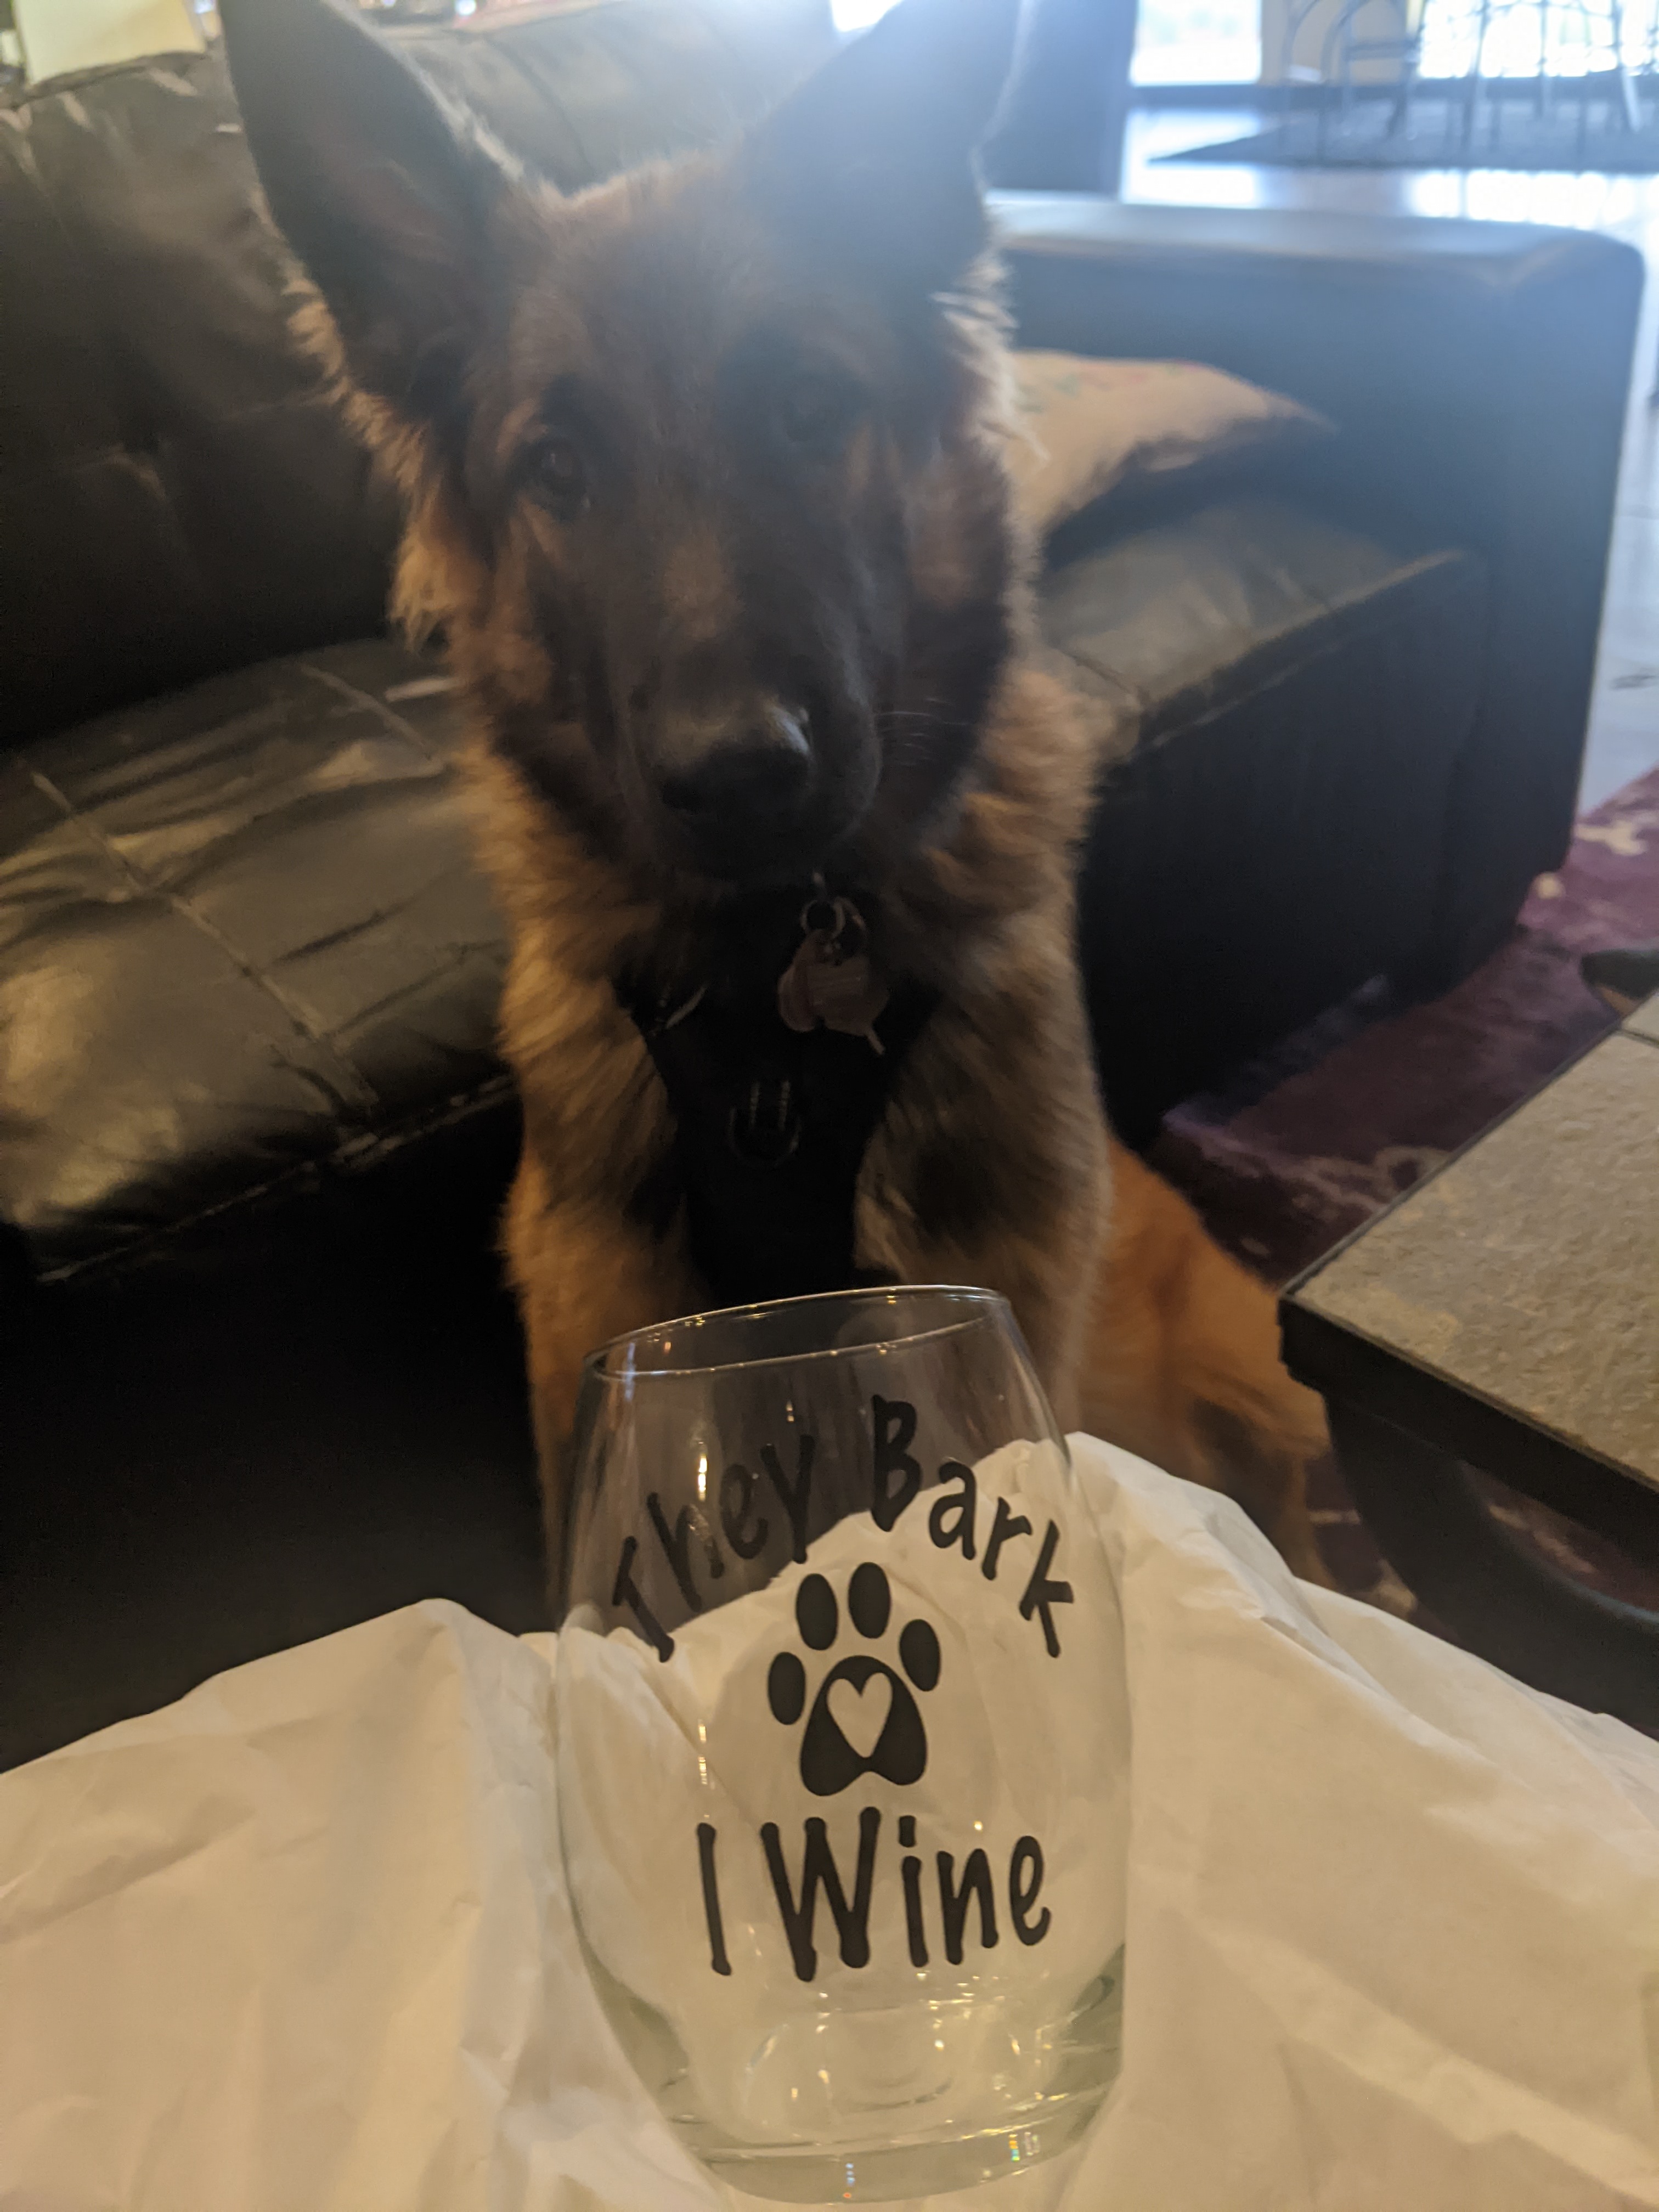 Rodan posing with a dog themed wine glass